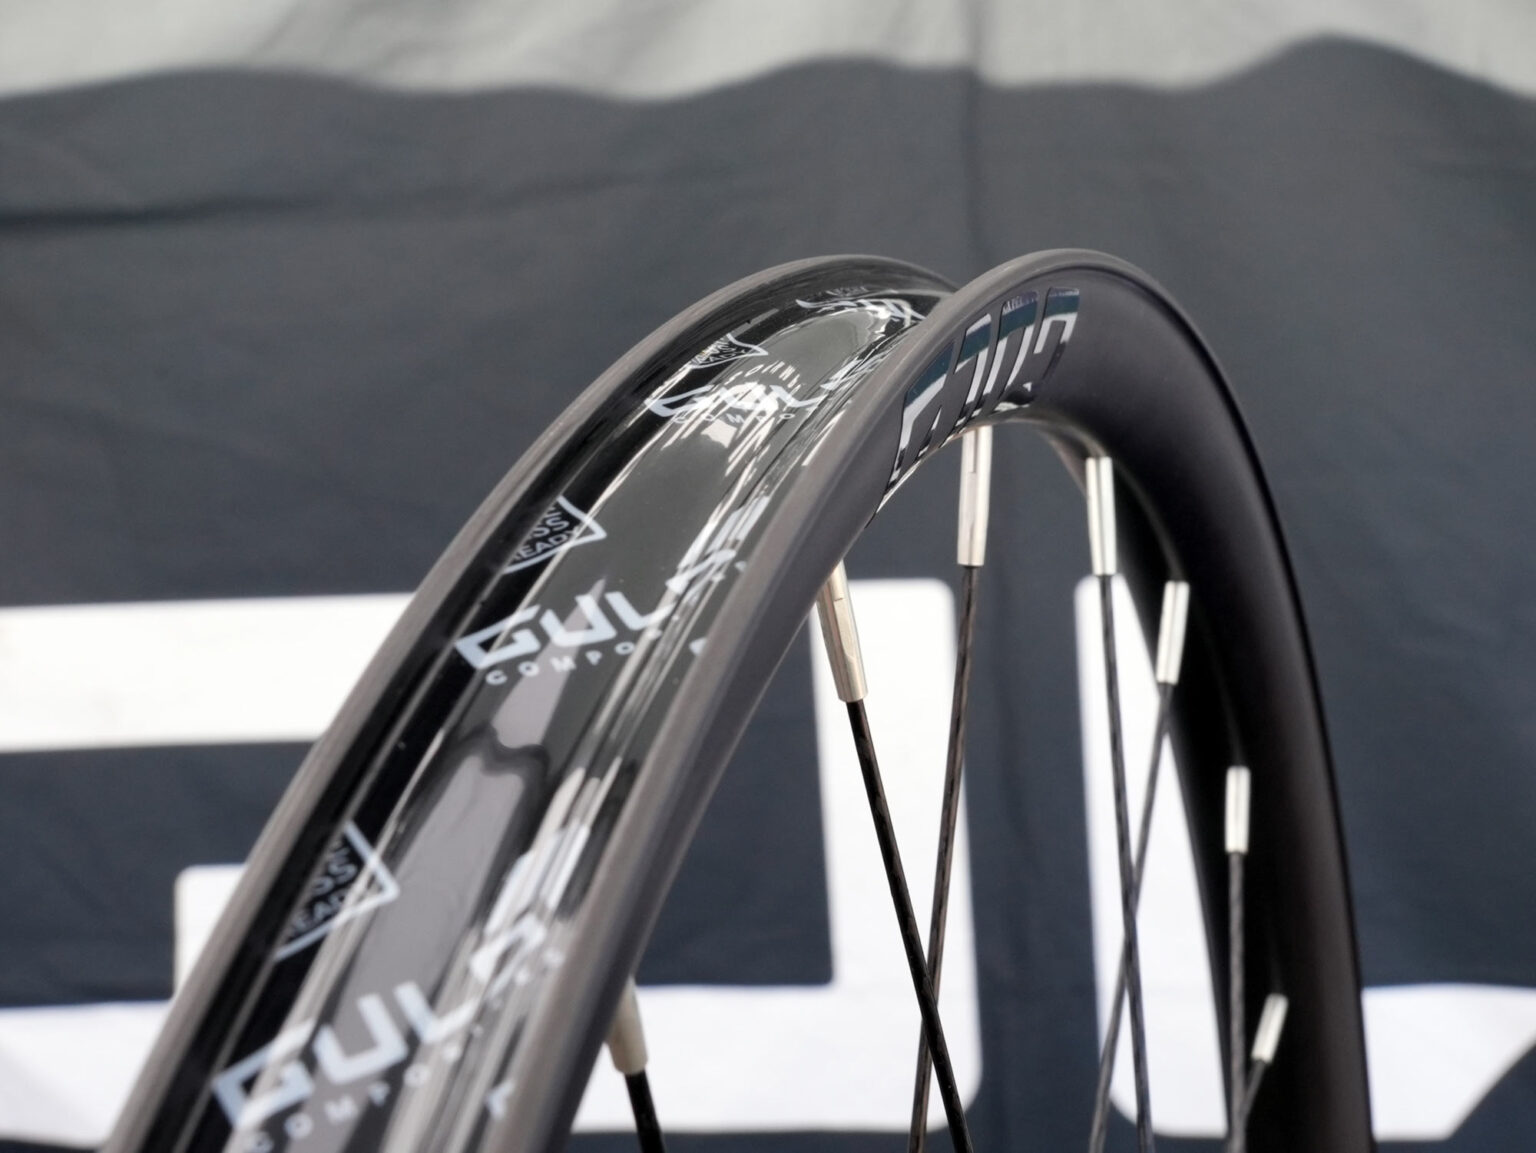 prototype gulo xc mountain bike wheels with ultralight rim and carbon spokes